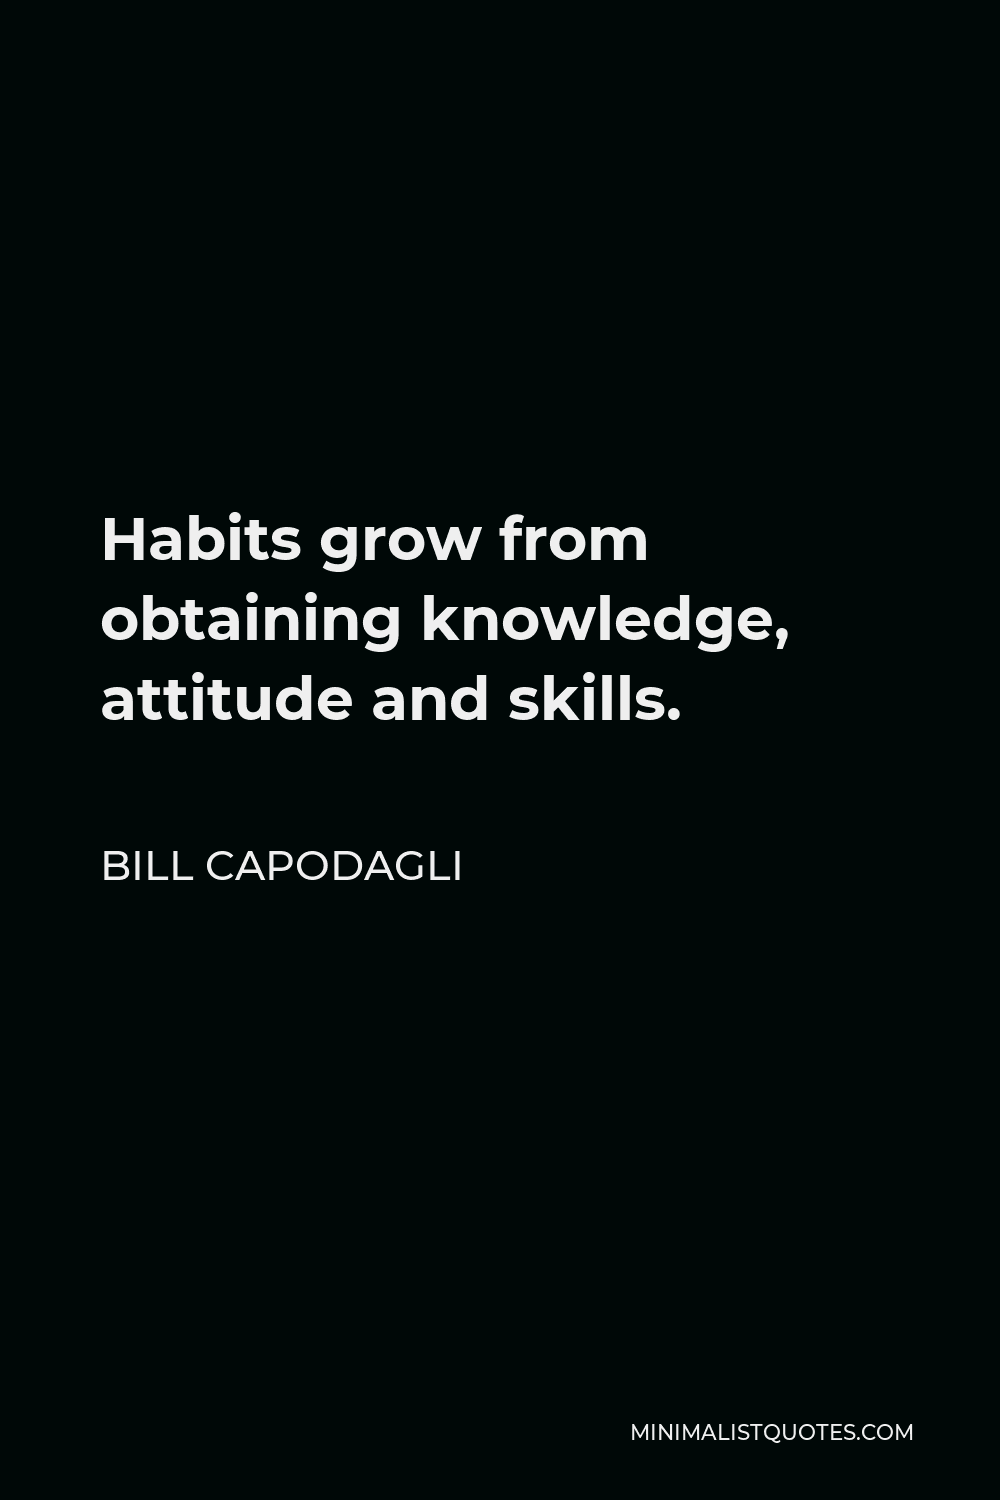 Bill Capodagli Quote - Habits grow from obtaining knowledge, attitude and skills.